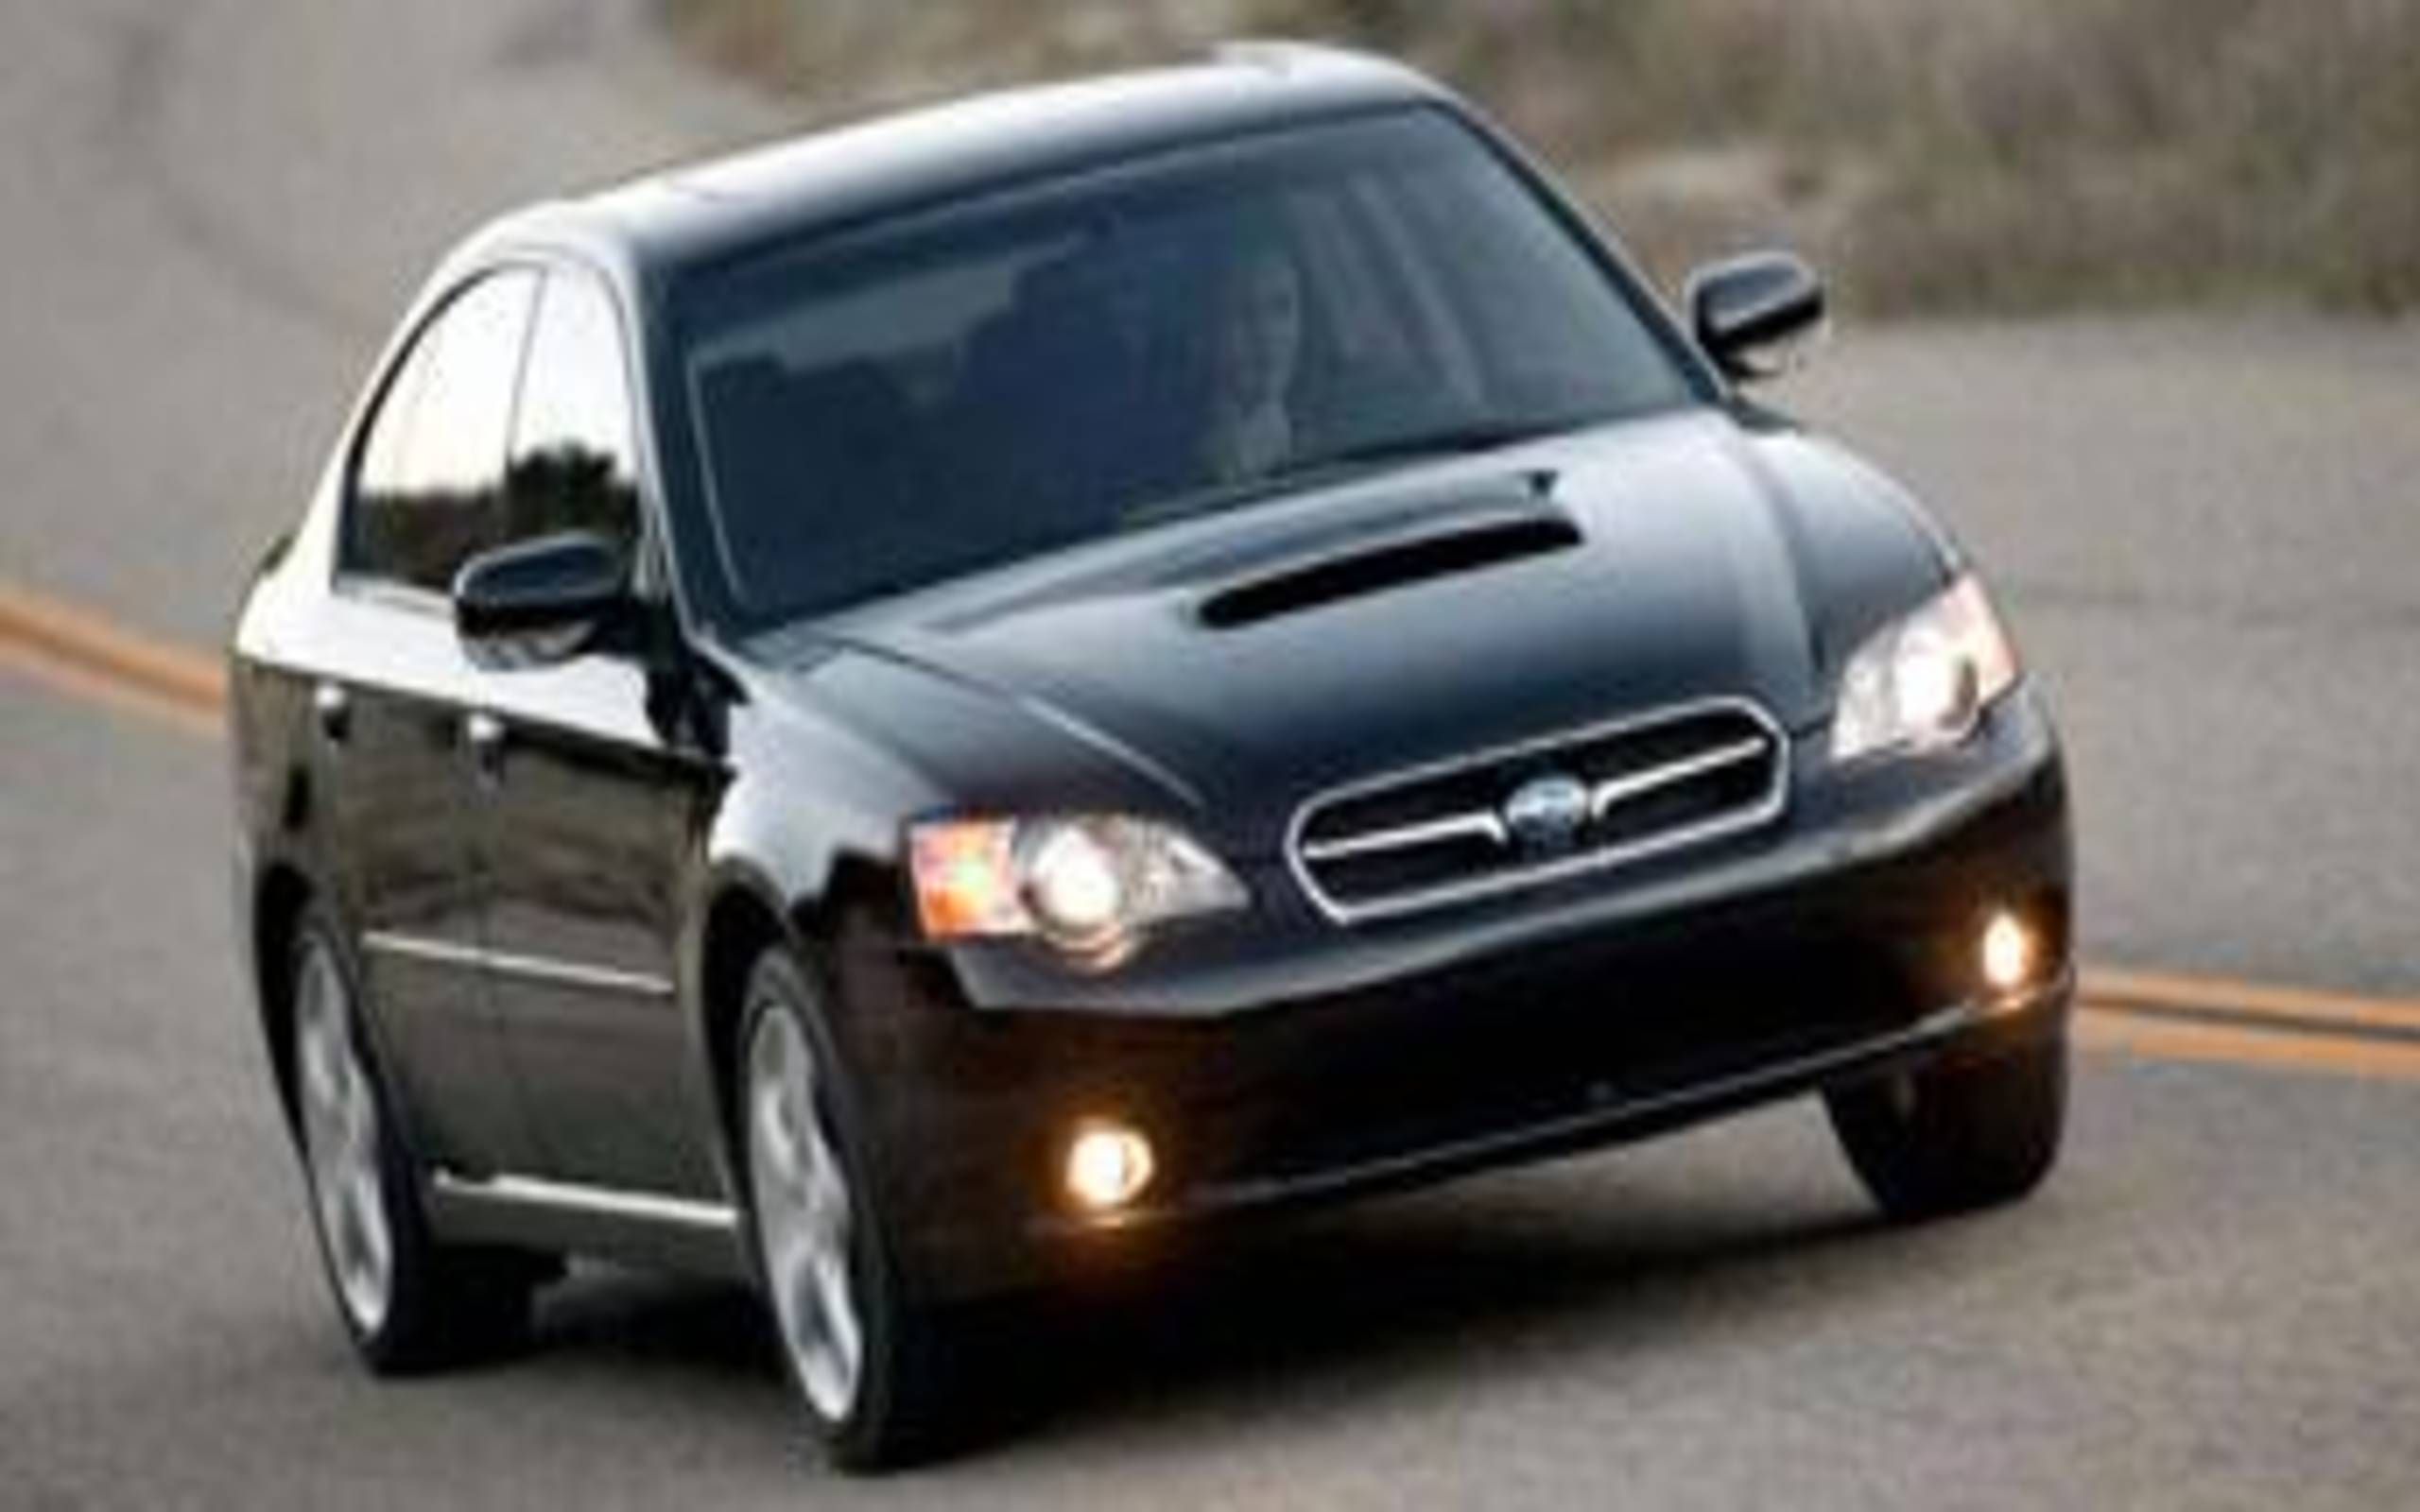 2005 Subaru Legacy 2.5 GT limited: Wake up to this sleeper: Improved Legacy  takes Subaru quietly upmarket